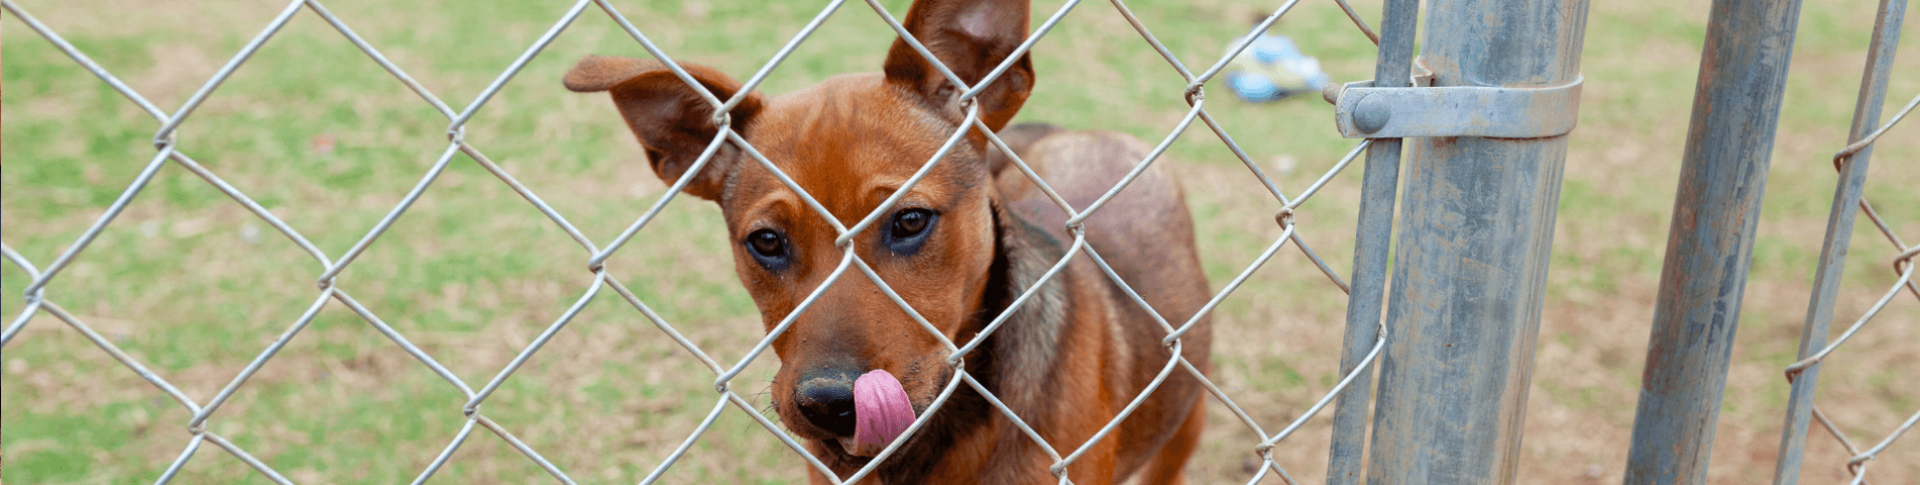 a dog licking its nose through a fence